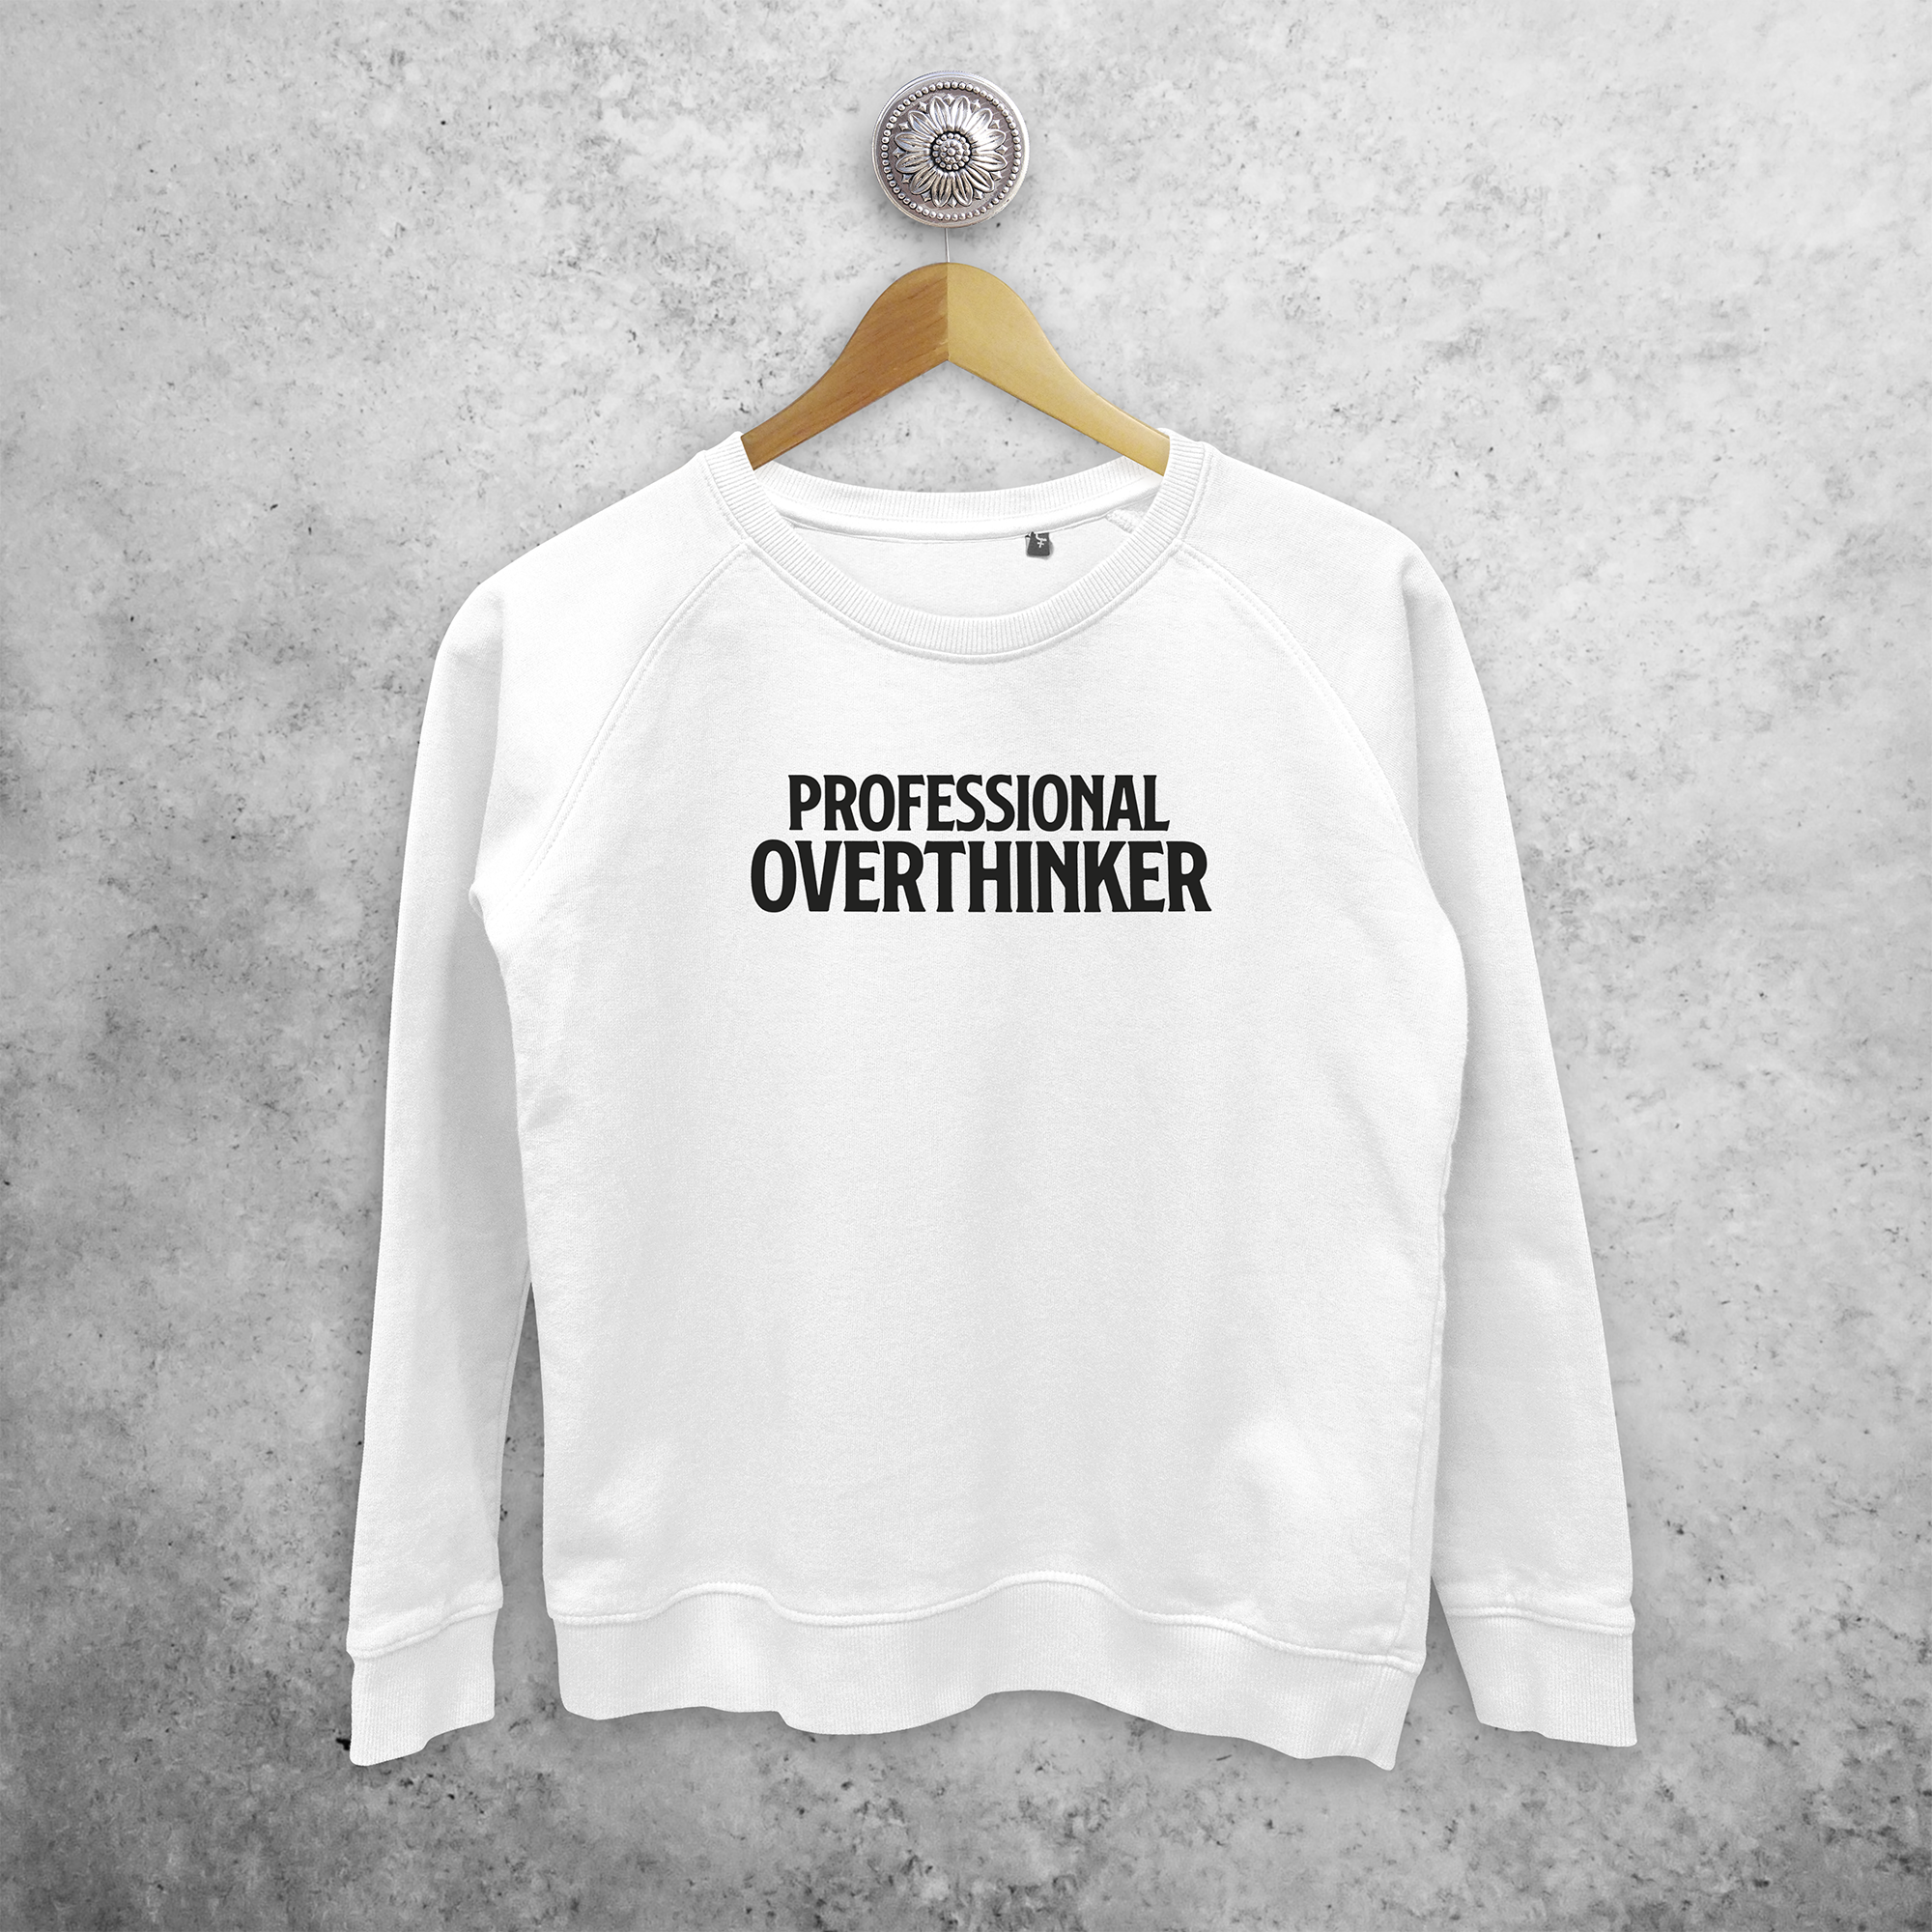 'Professional overthinker' sweater